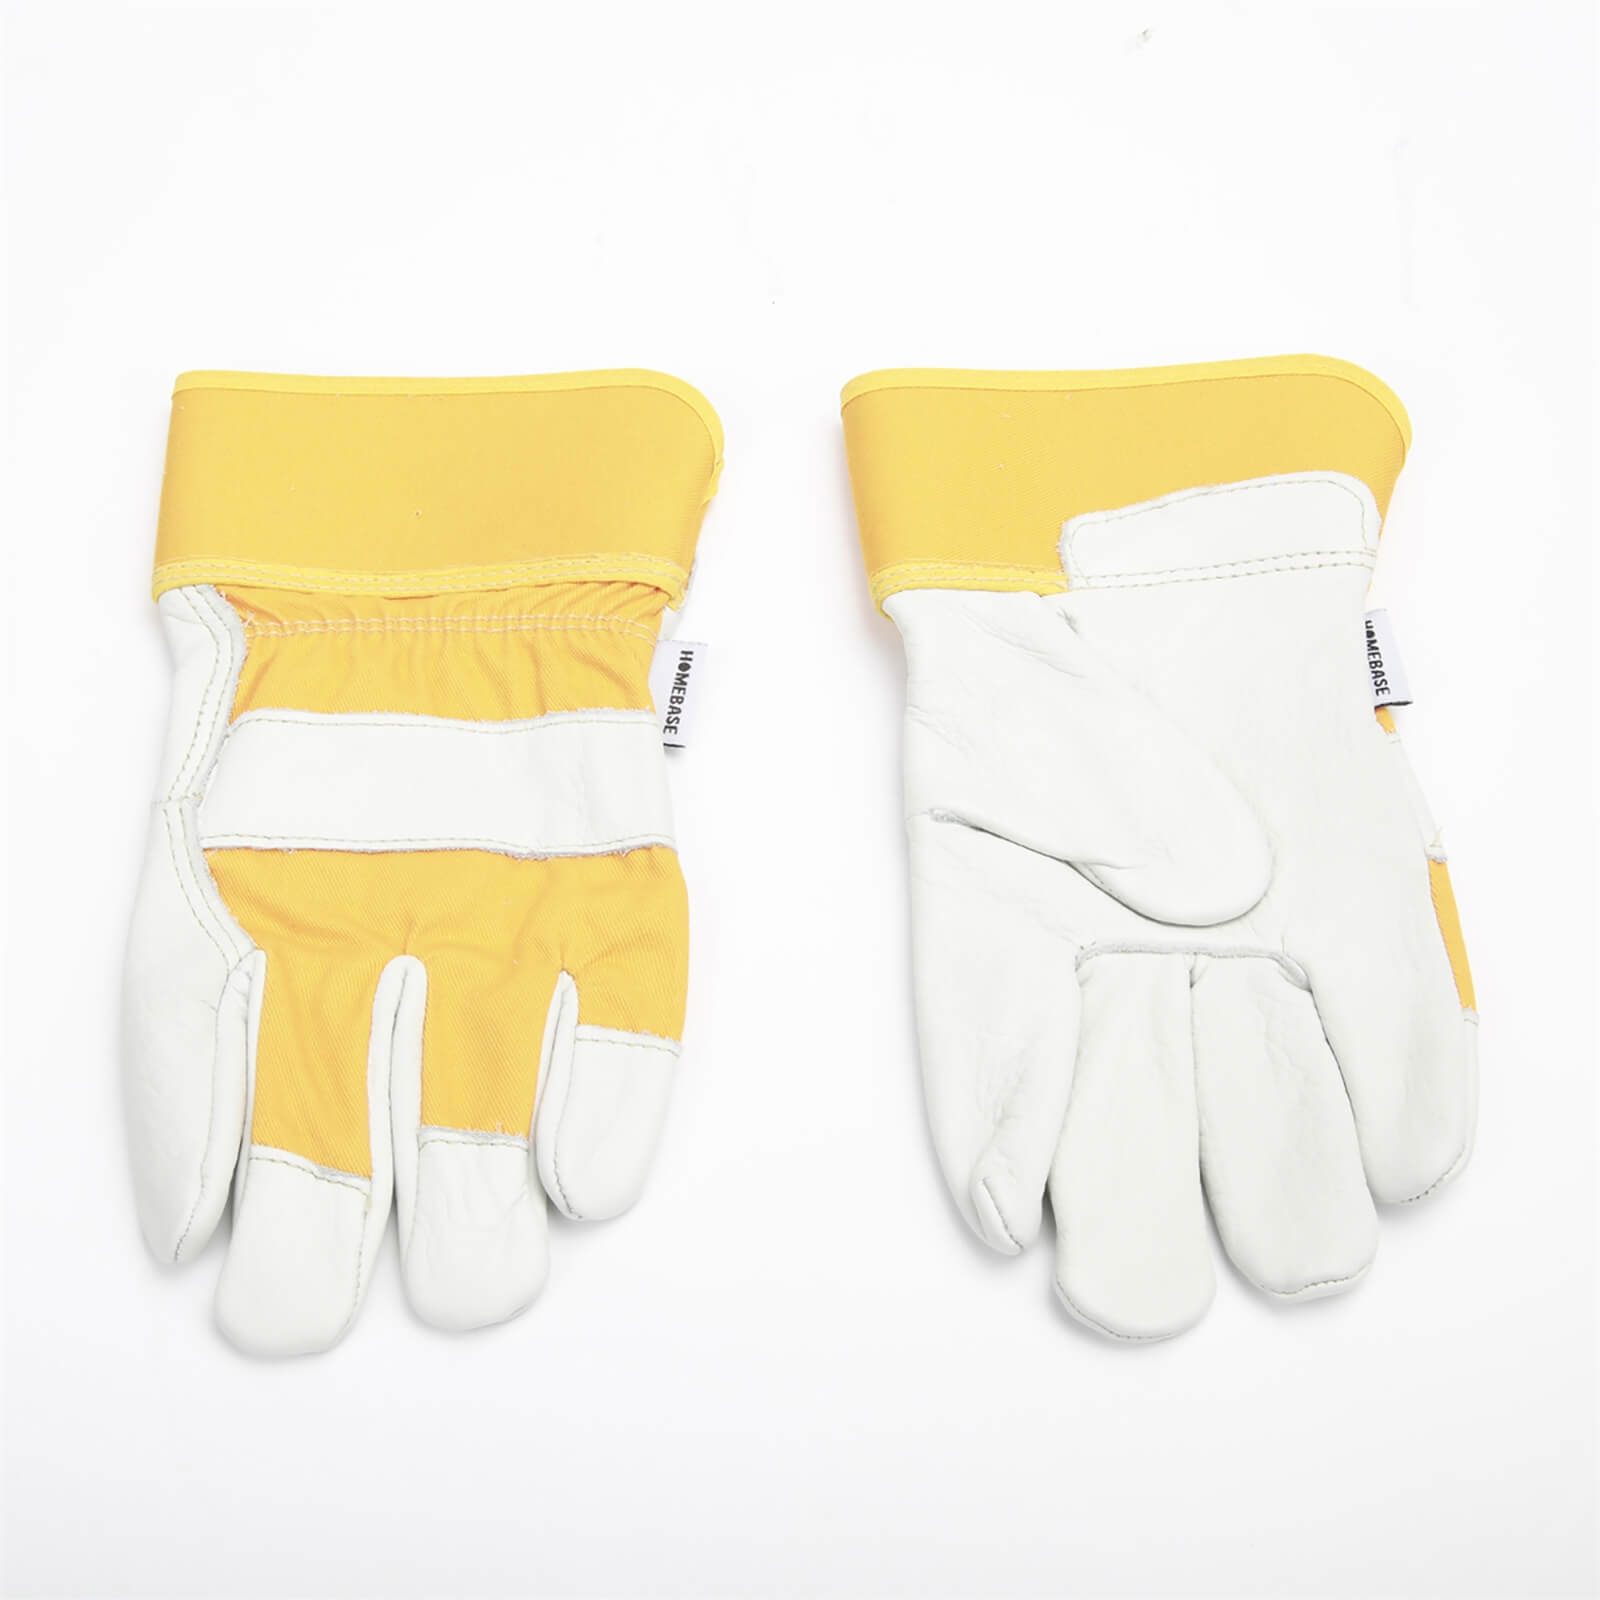 Homebase Premium Rigger Glove - Small